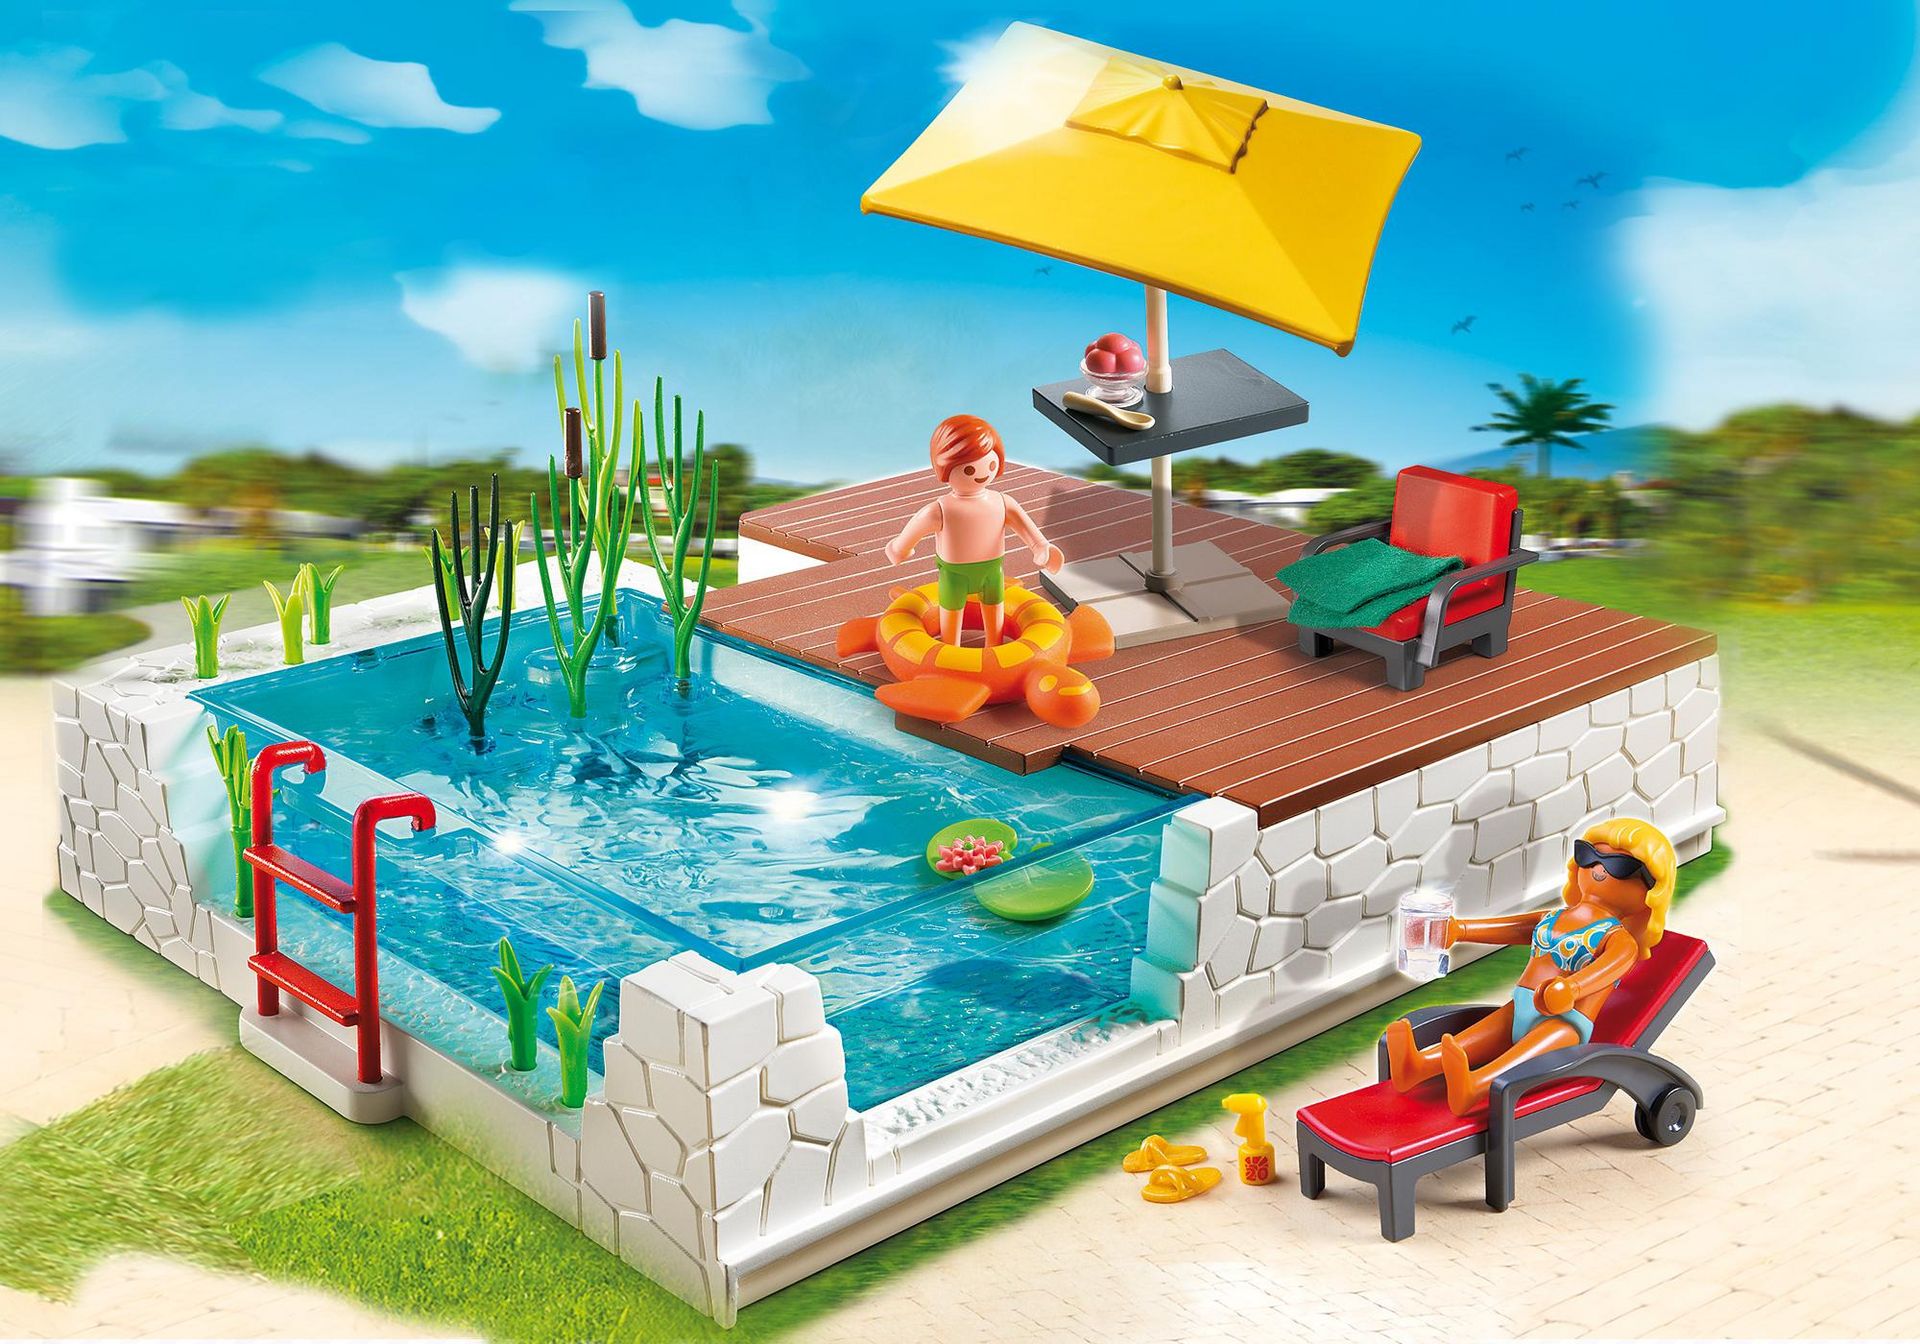 sol grey shower & location pool pump 4858 v249 Playmobil leisure 